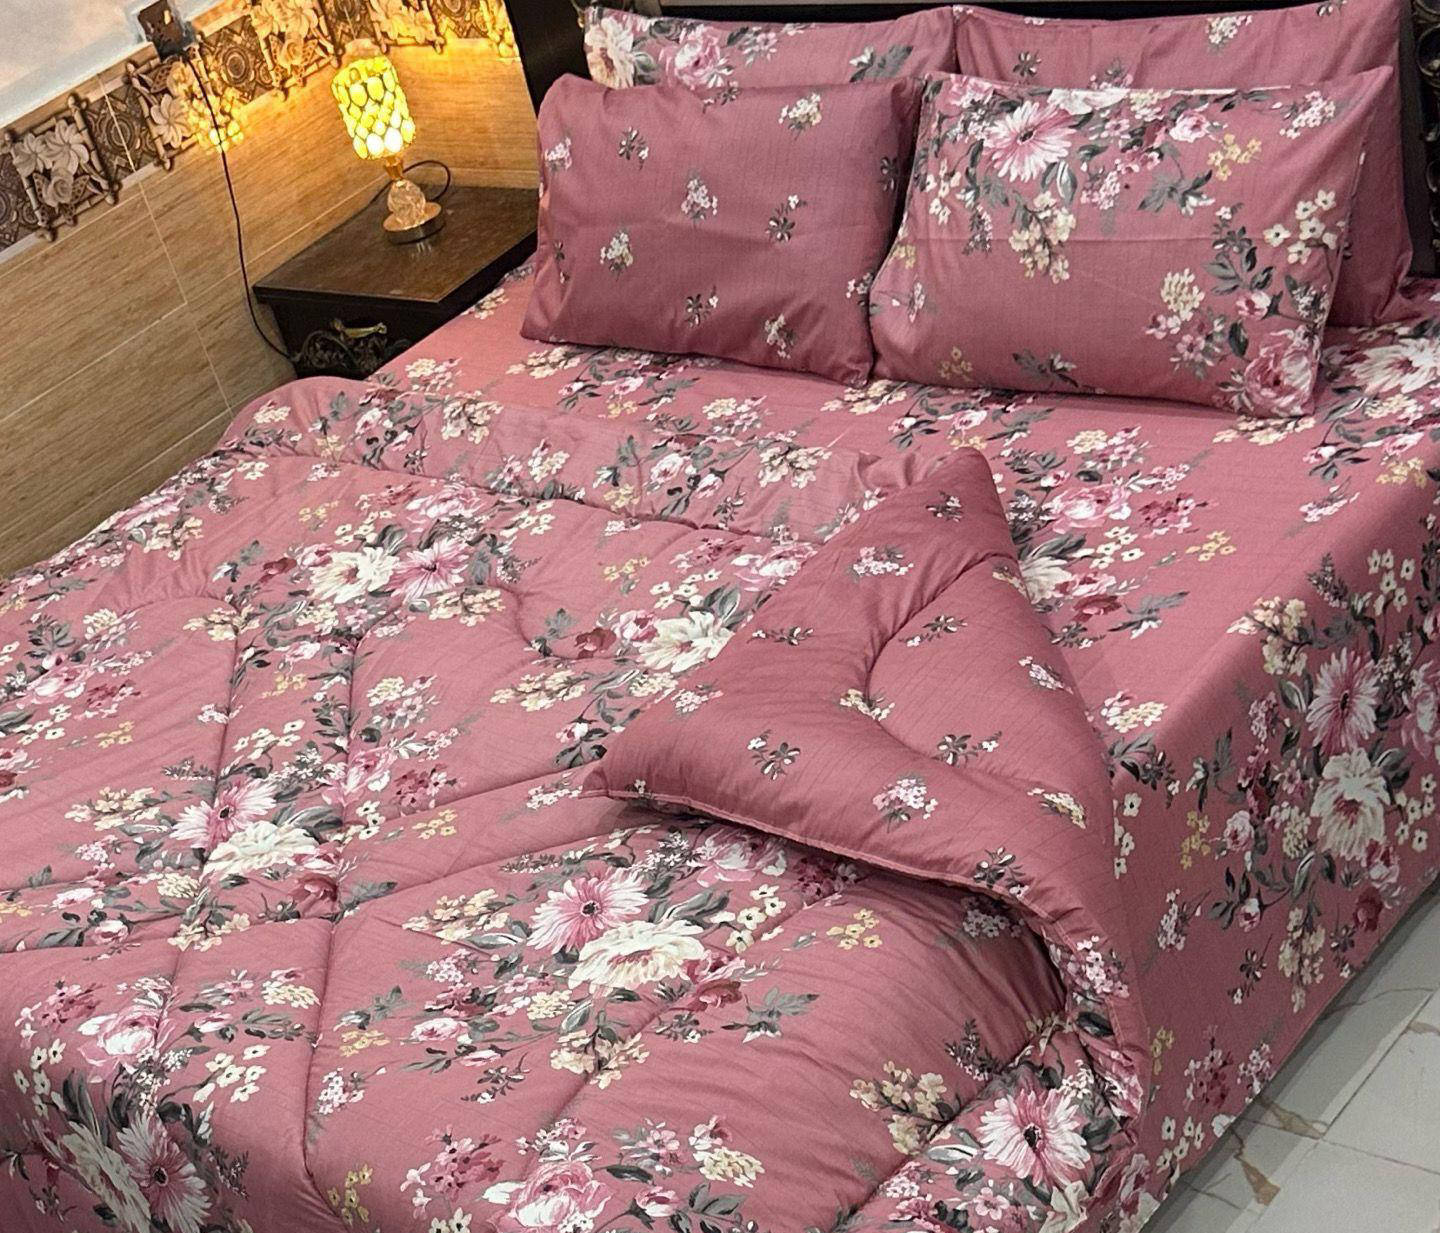 Bedsheet Set with Comforter - Pink